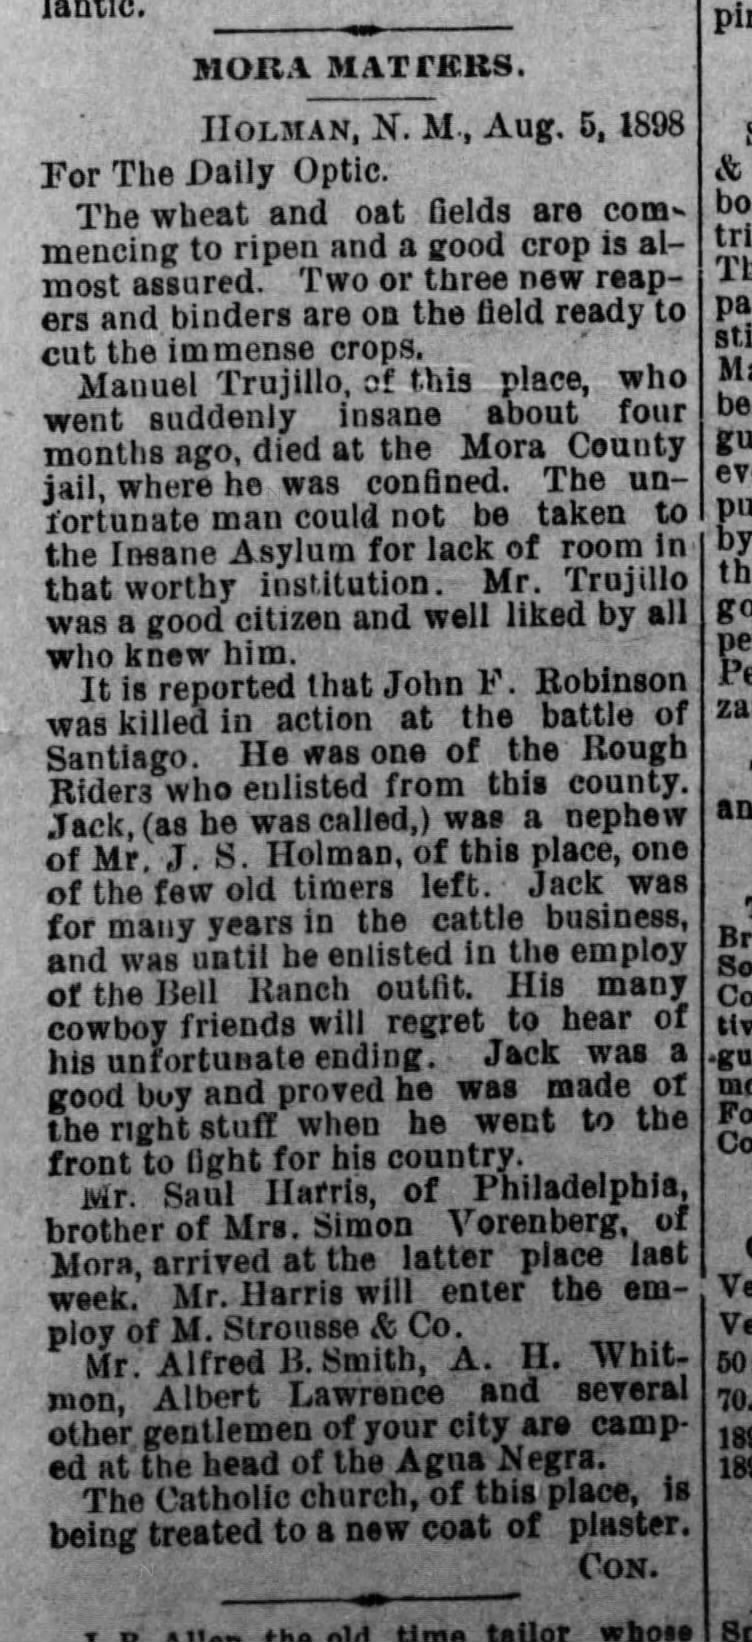 John F. Robinson, Rough Rider, killed in Cuba